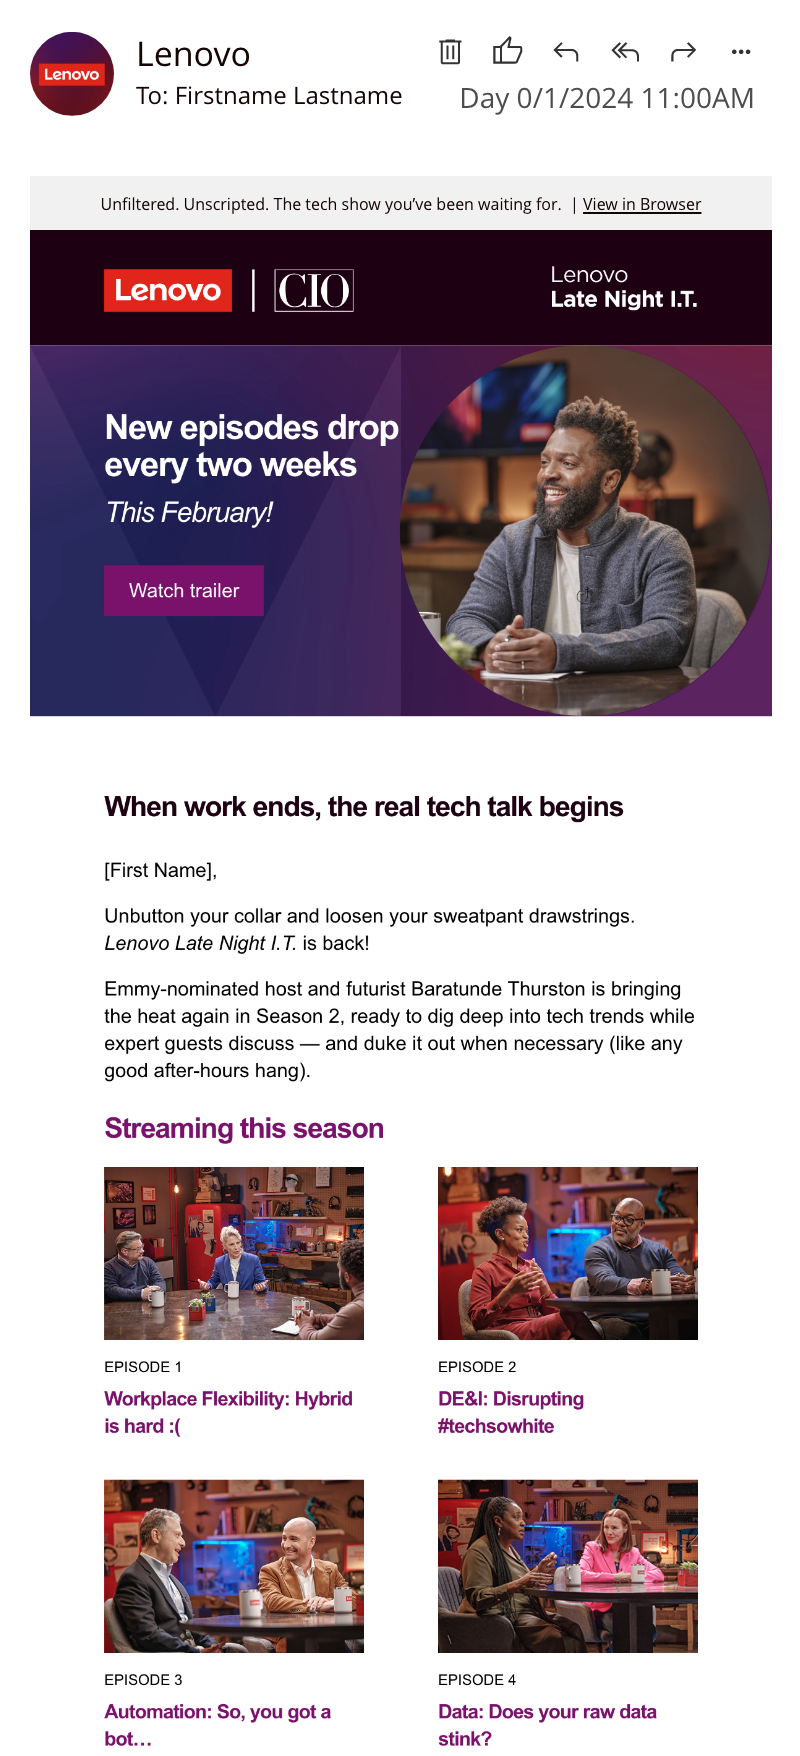 Lenovo Late Night I.T. promo email example.